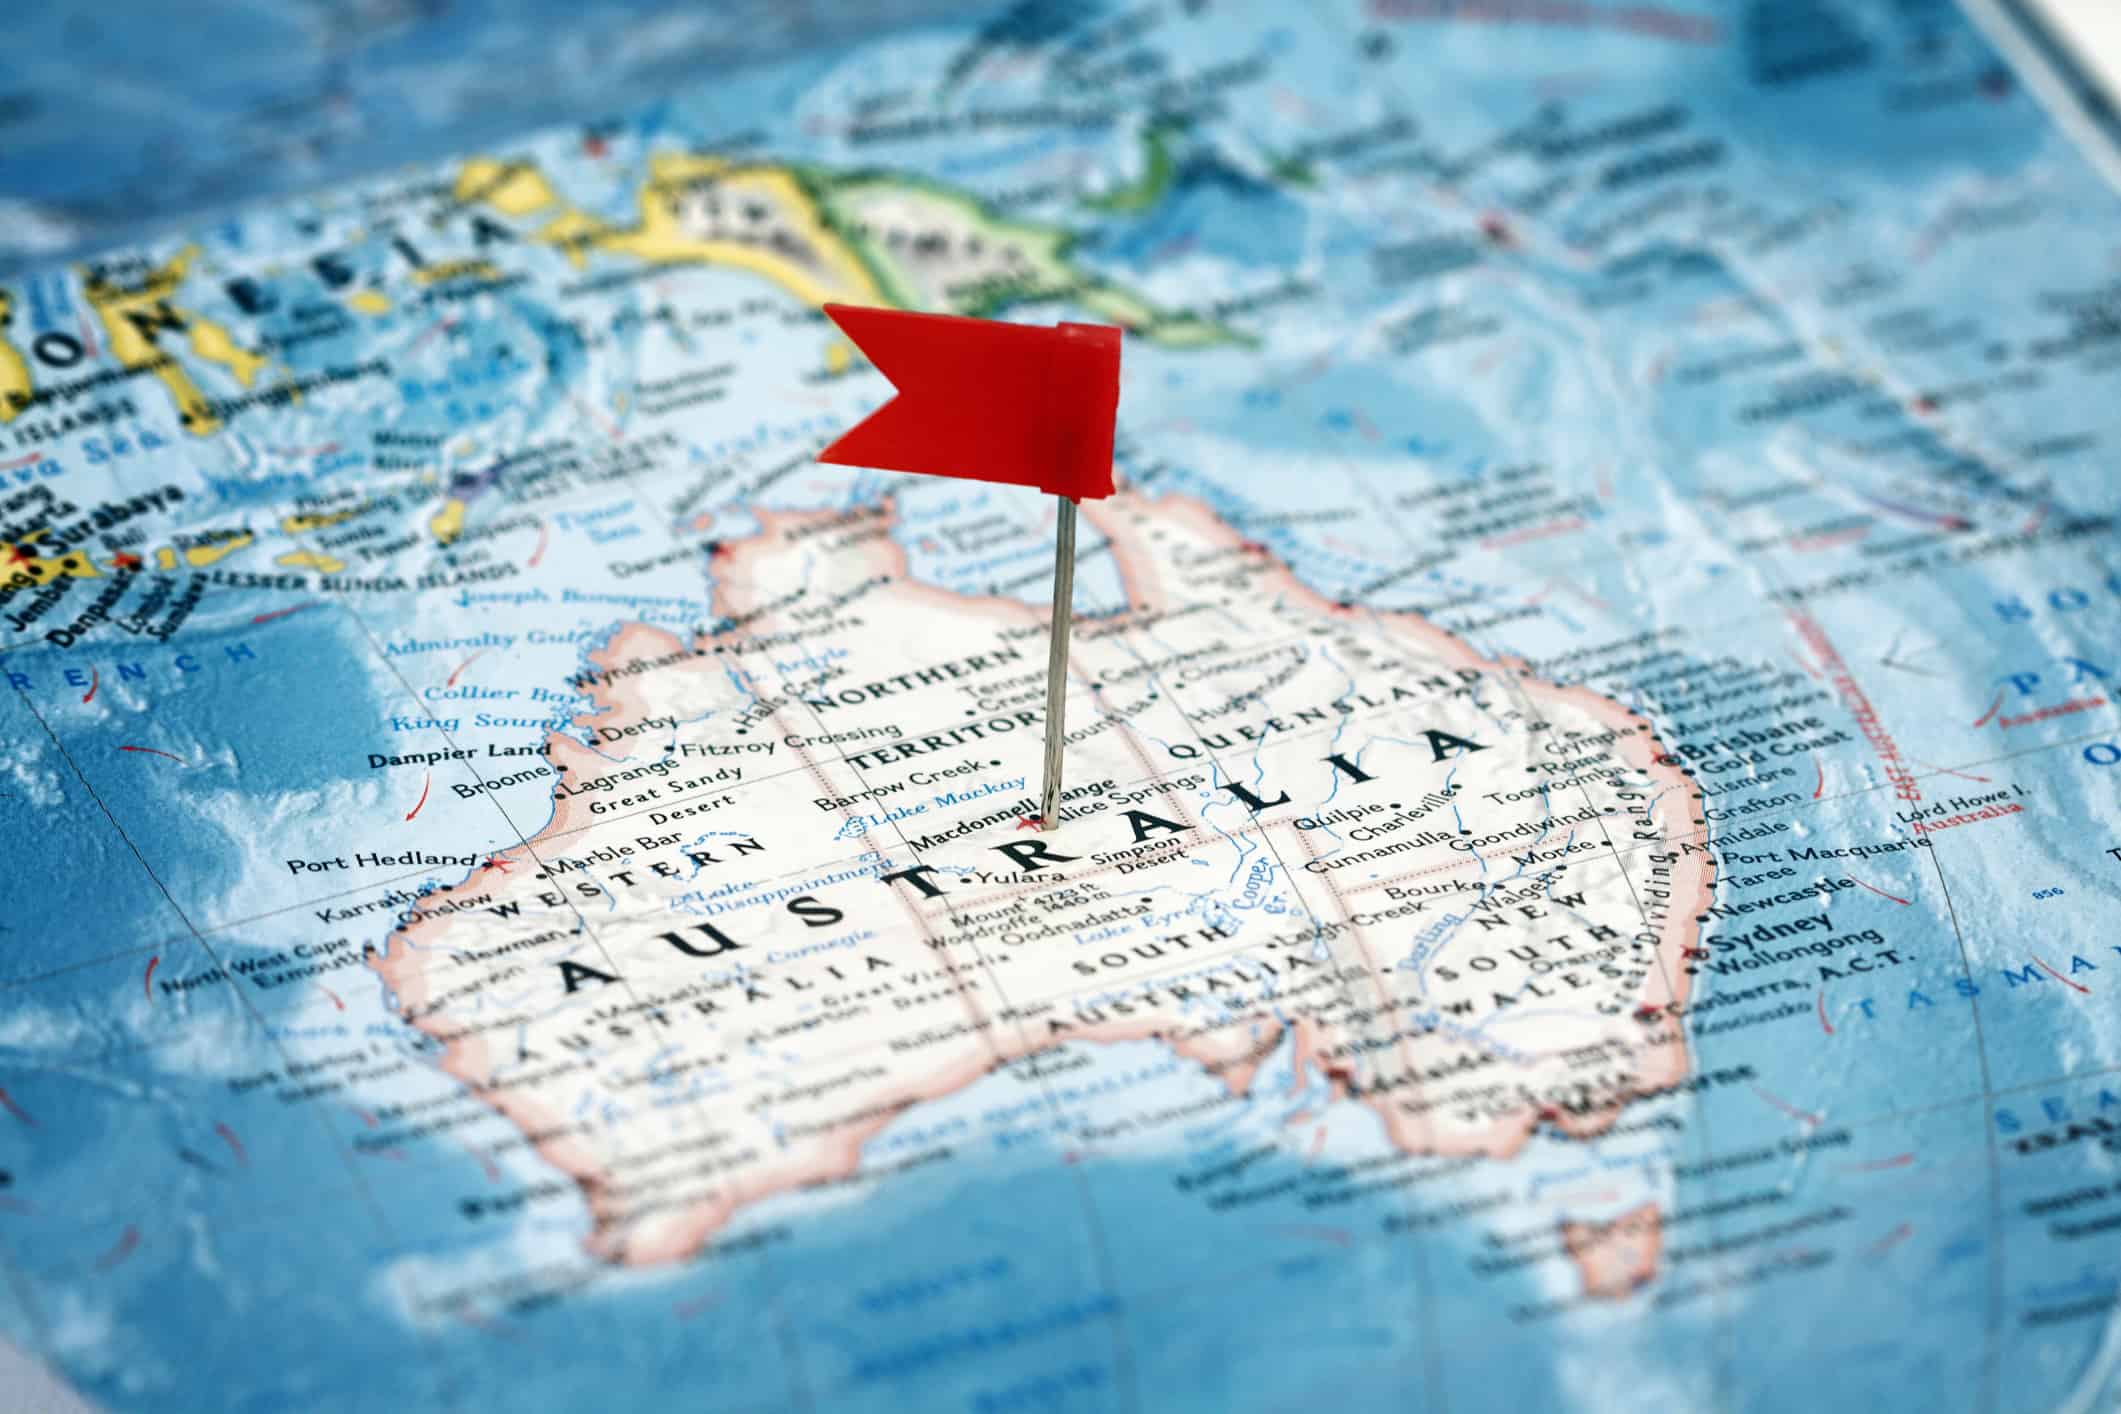 Australia on the map